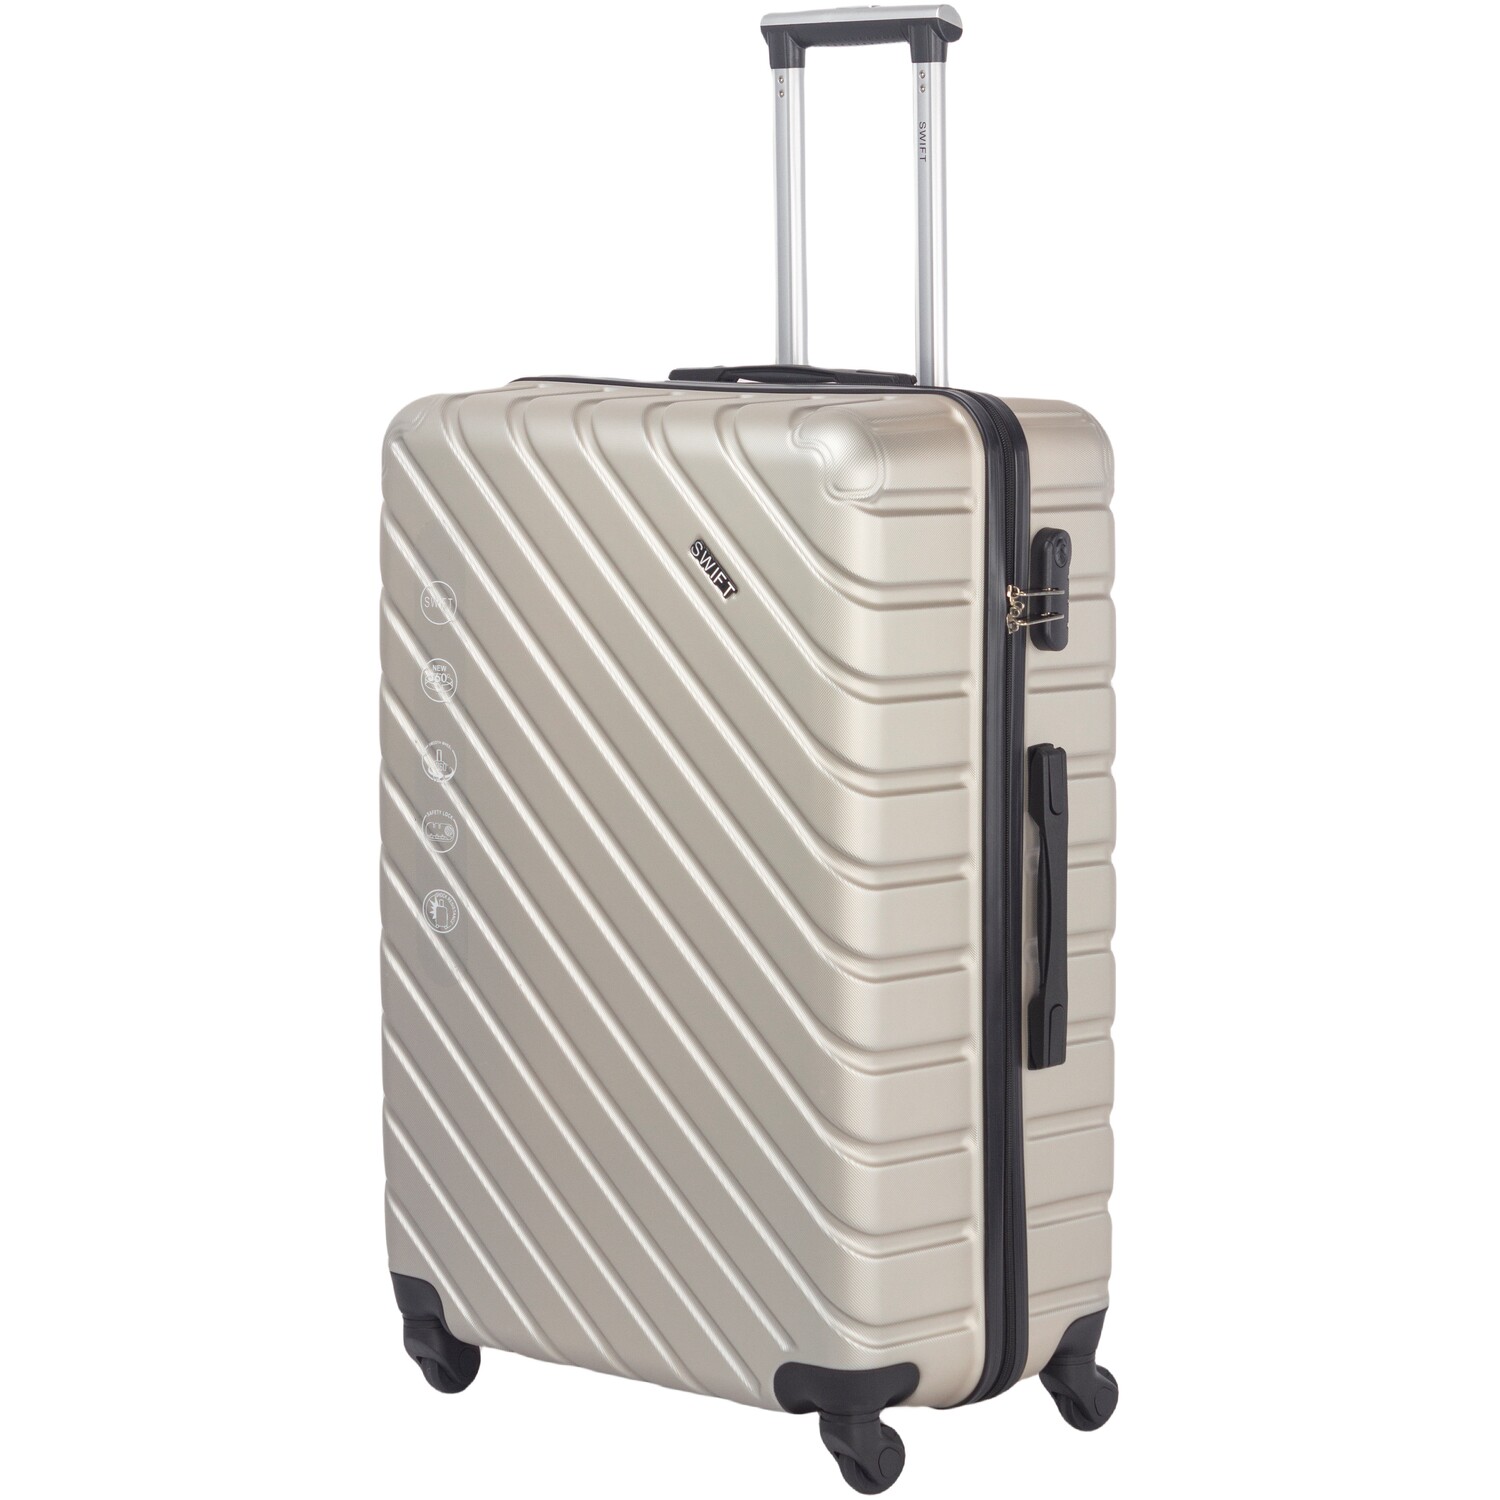 Swift Astral Suitcase - Beige  / Cabin Case Image 2